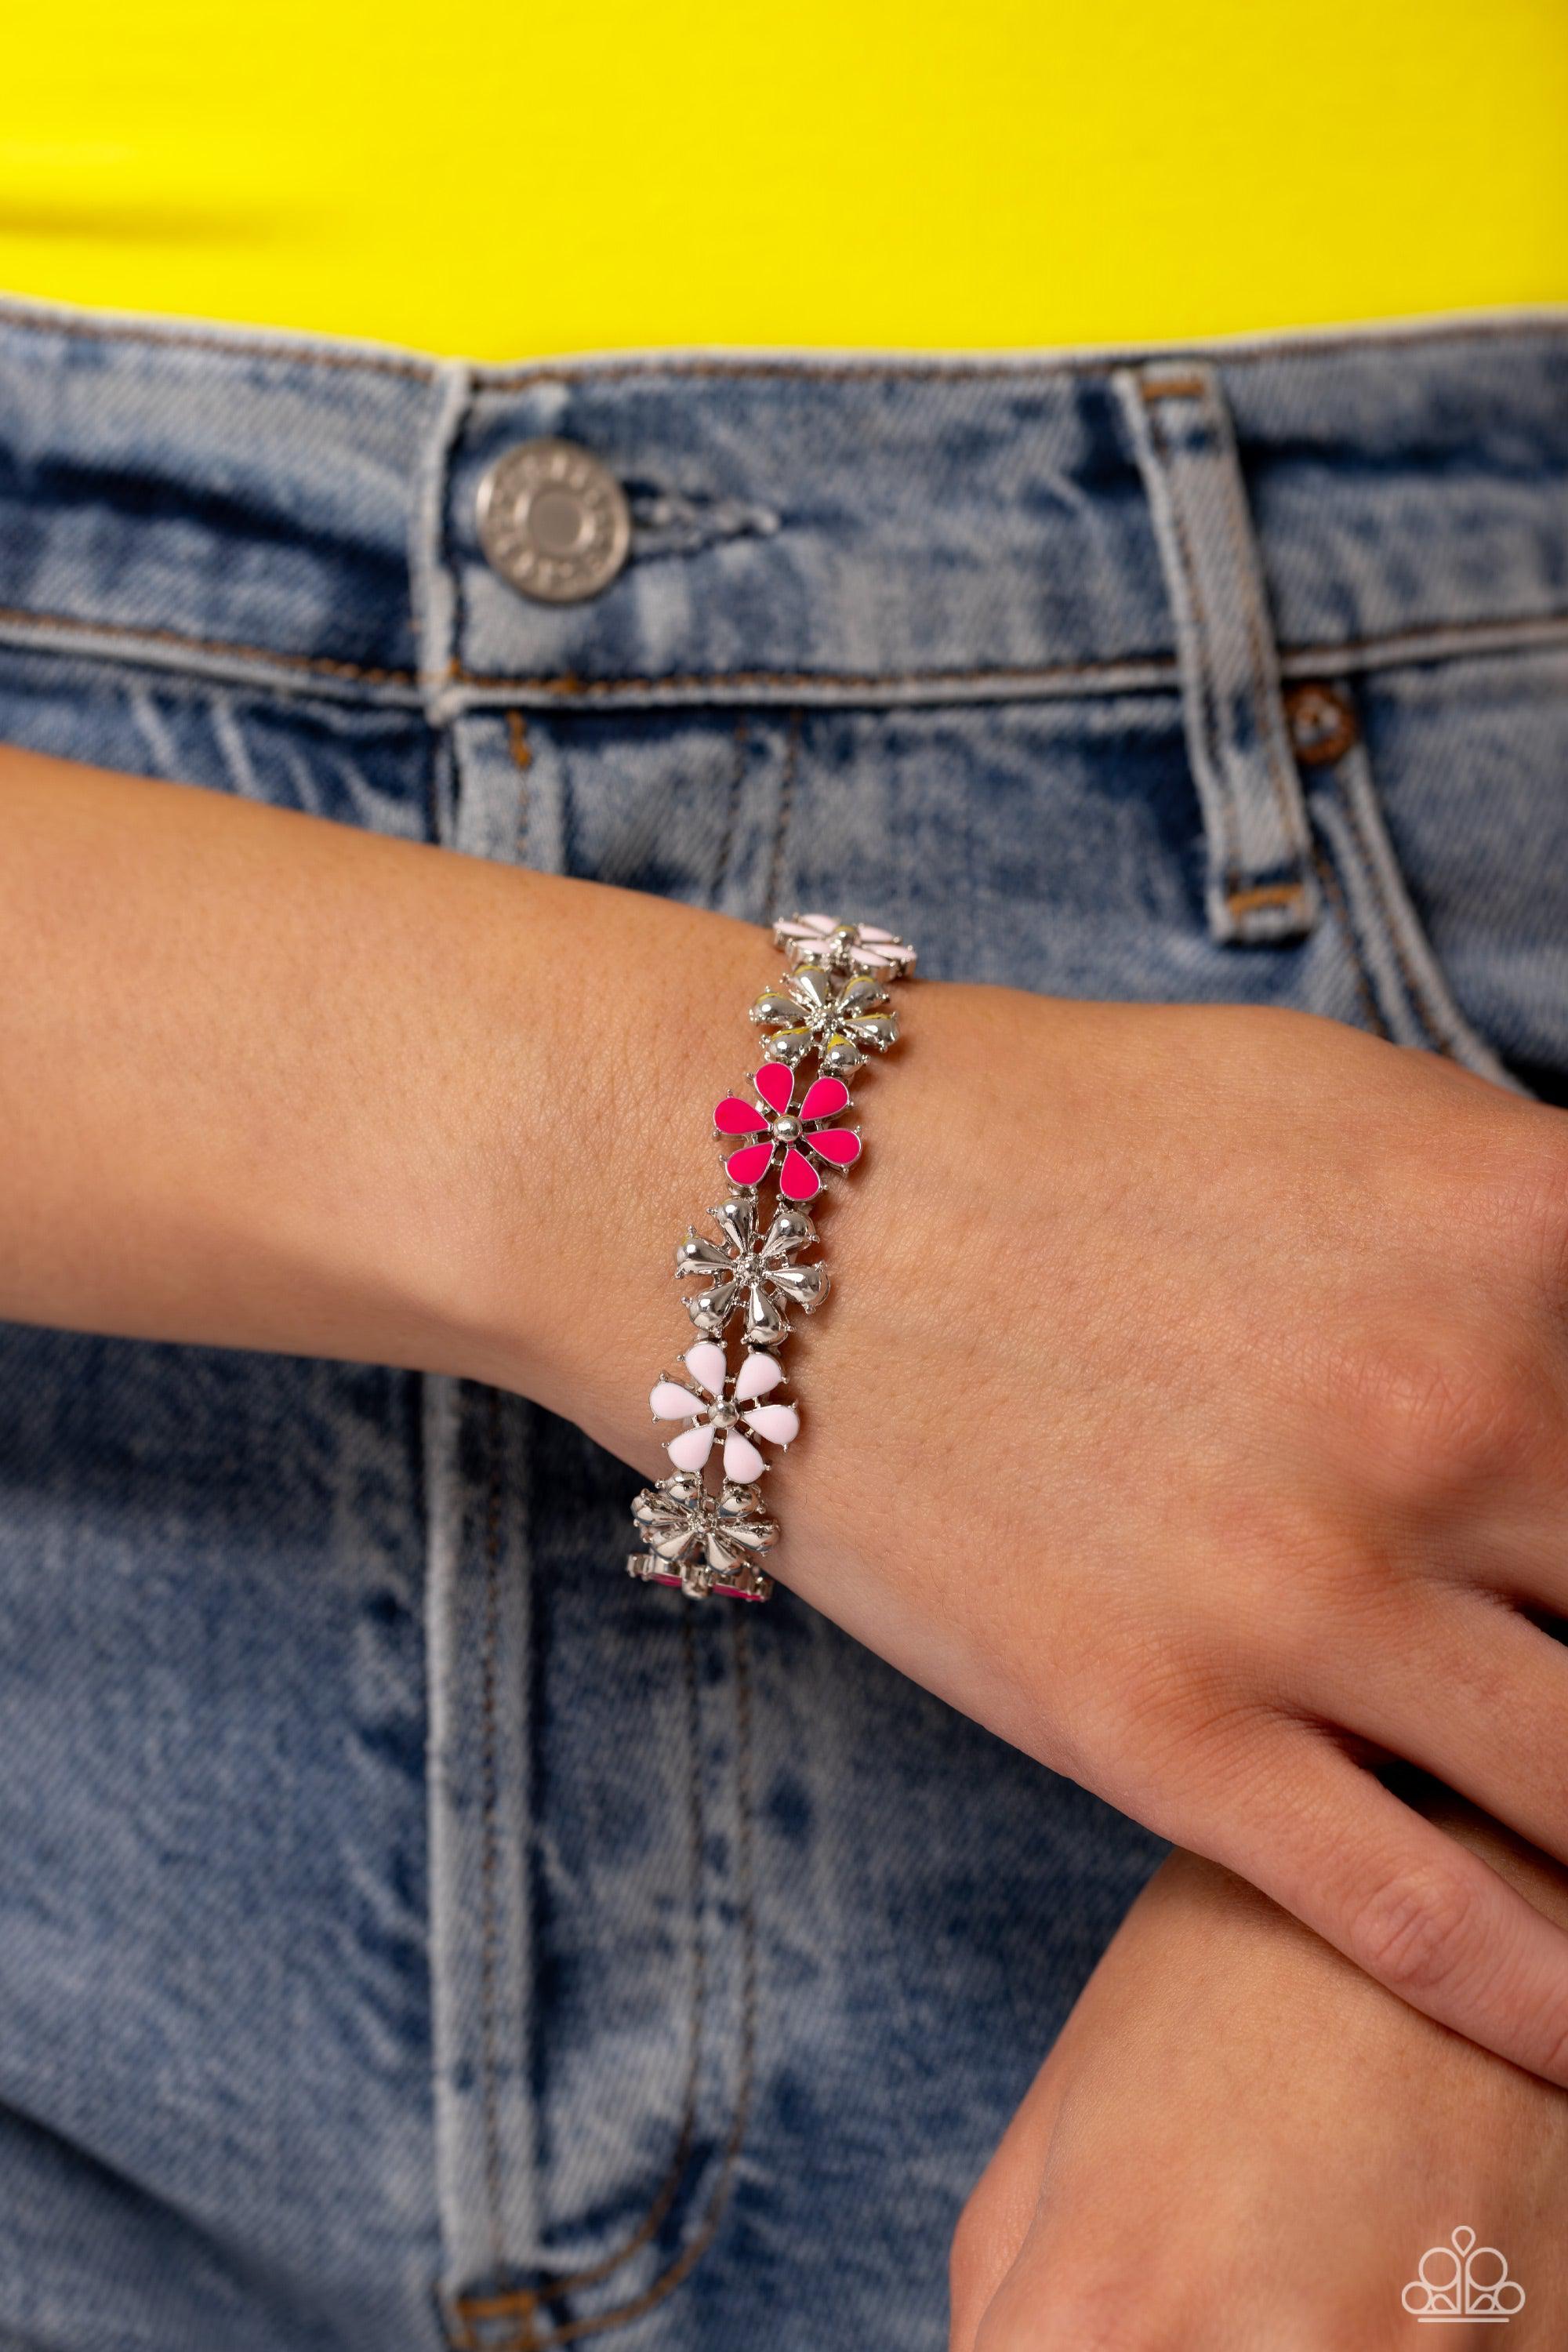 Floral Fair Pink Bracelet - Paparazzi Accessories- lightbox - CarasShop.com - $5 Jewelry by Cara Jewels